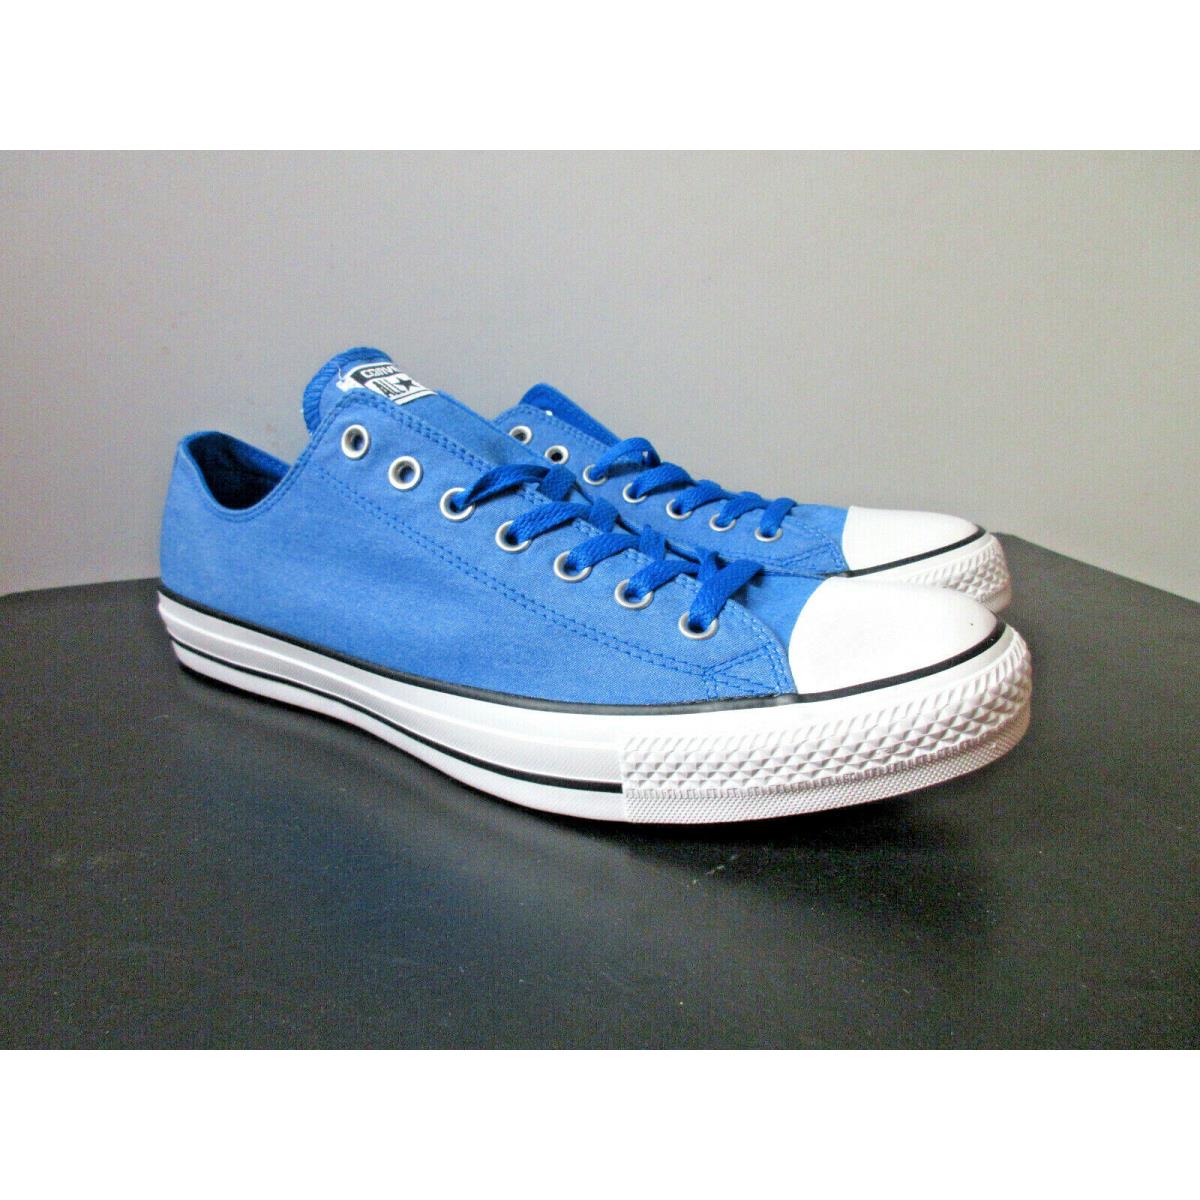 13 Converse Ctas OX Sneakers Shoes Soar Blue 155402F Size 13